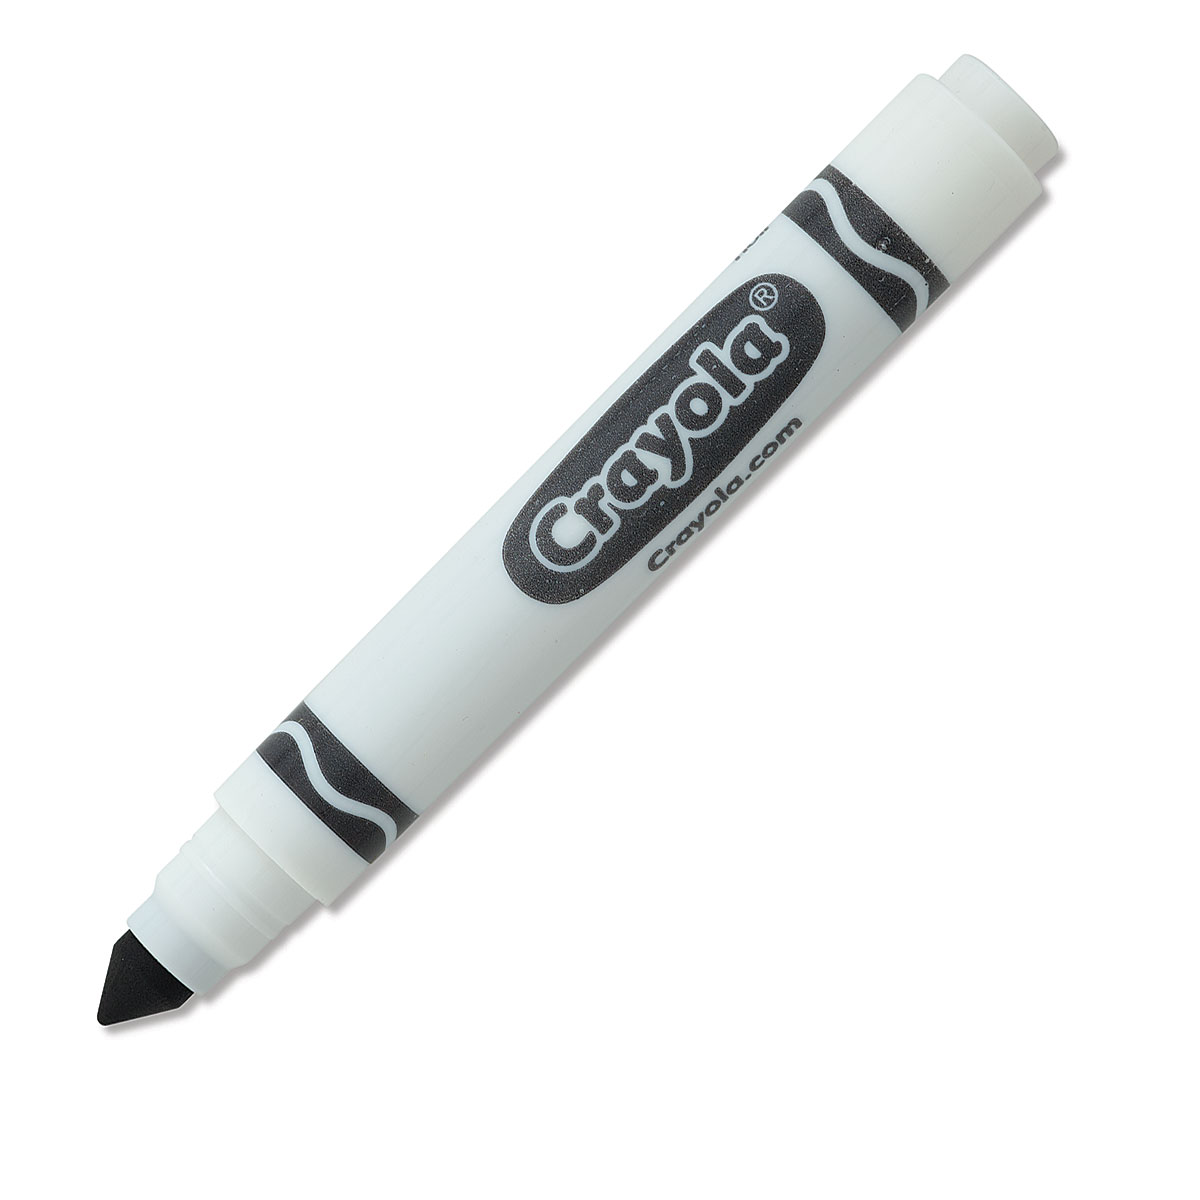 Crayola Classic Original Marker - Black, Broad Tip